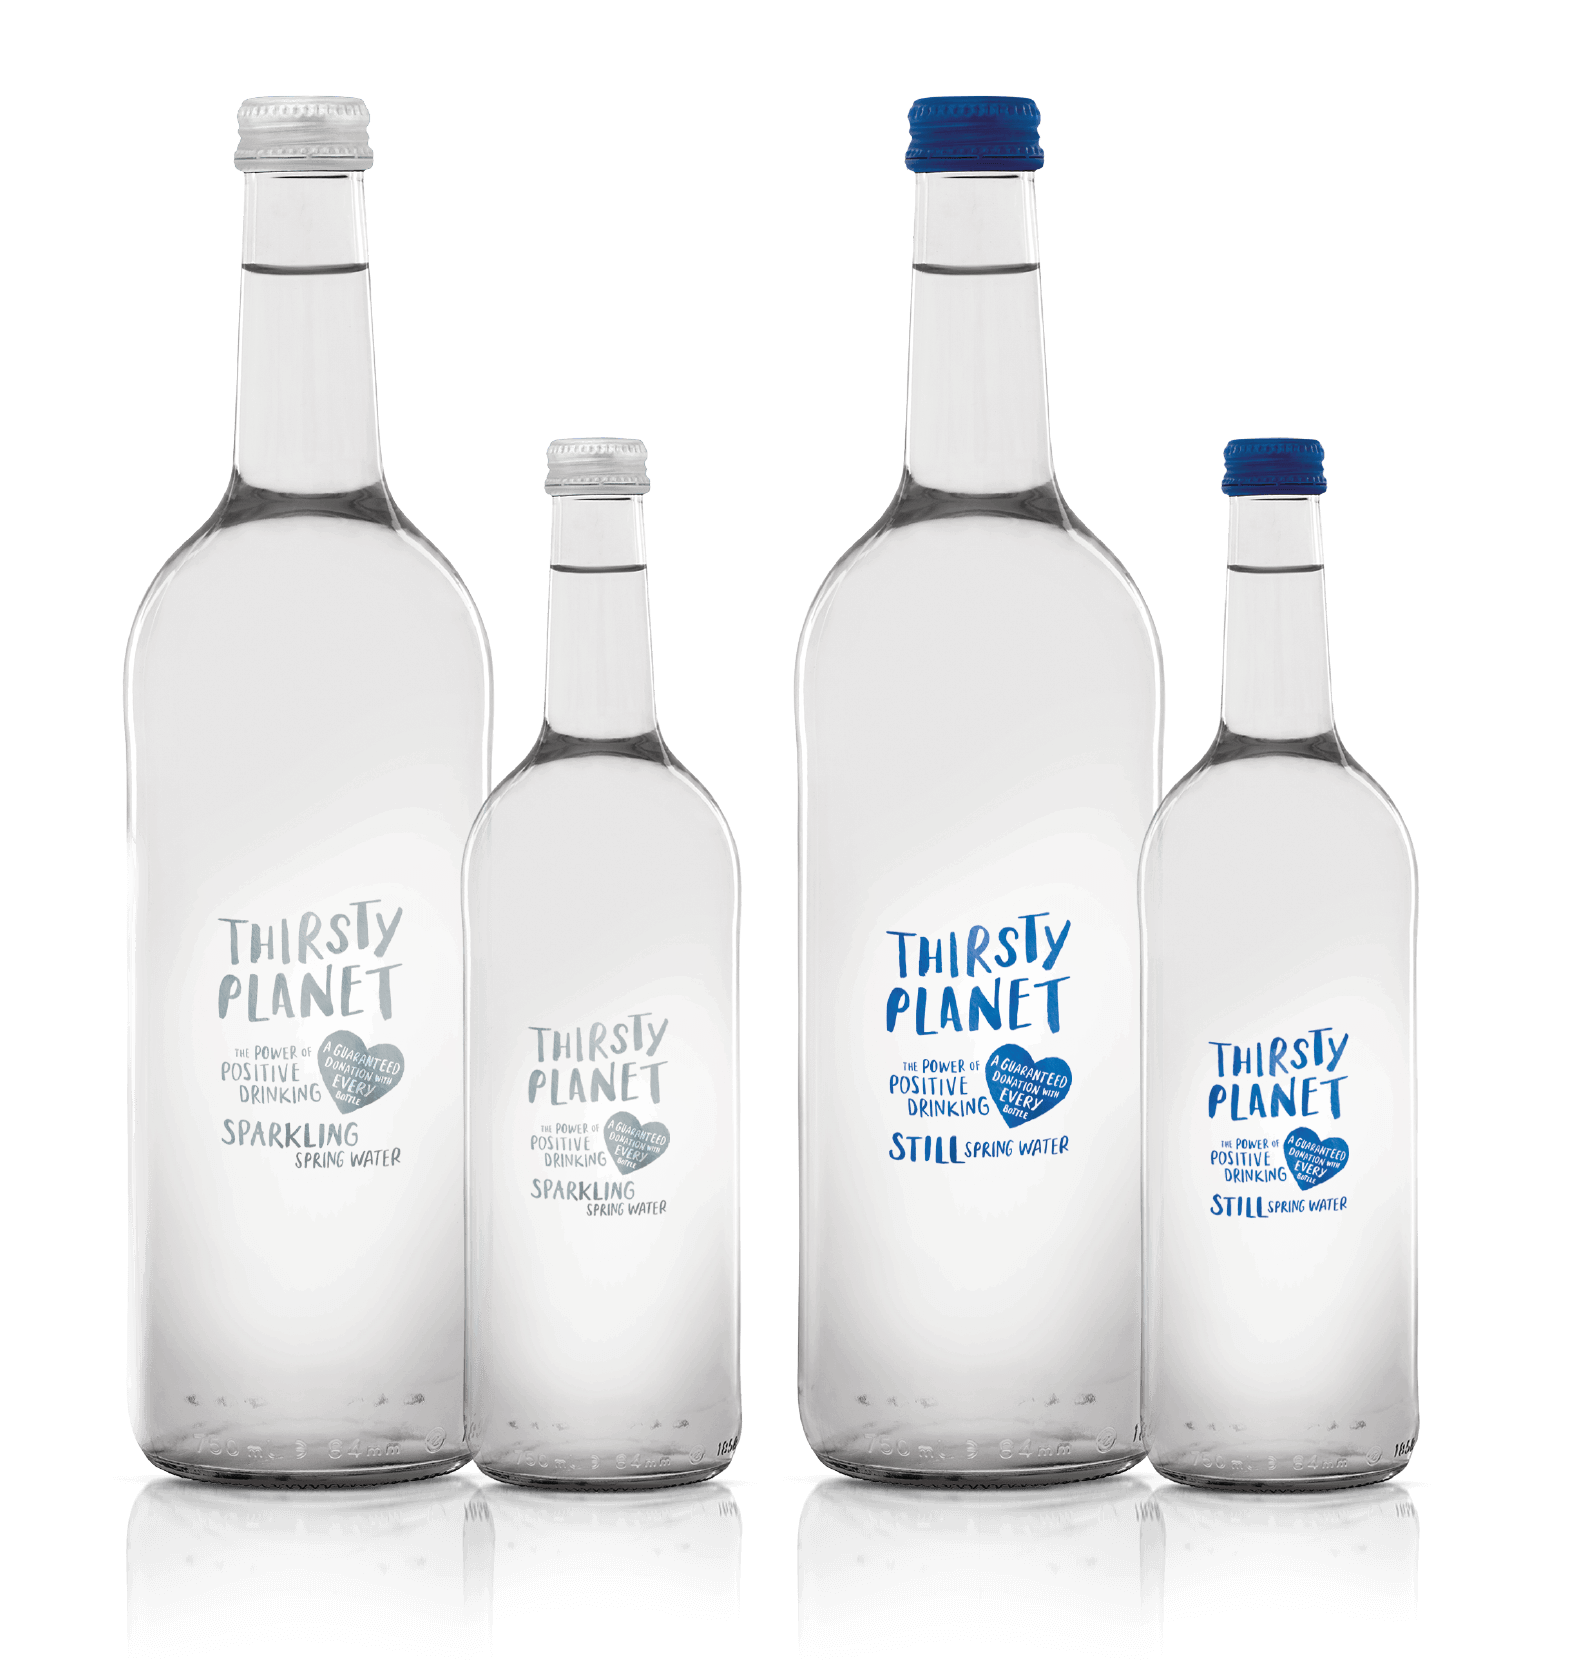 Thirsty Planet's Glass bottle range.